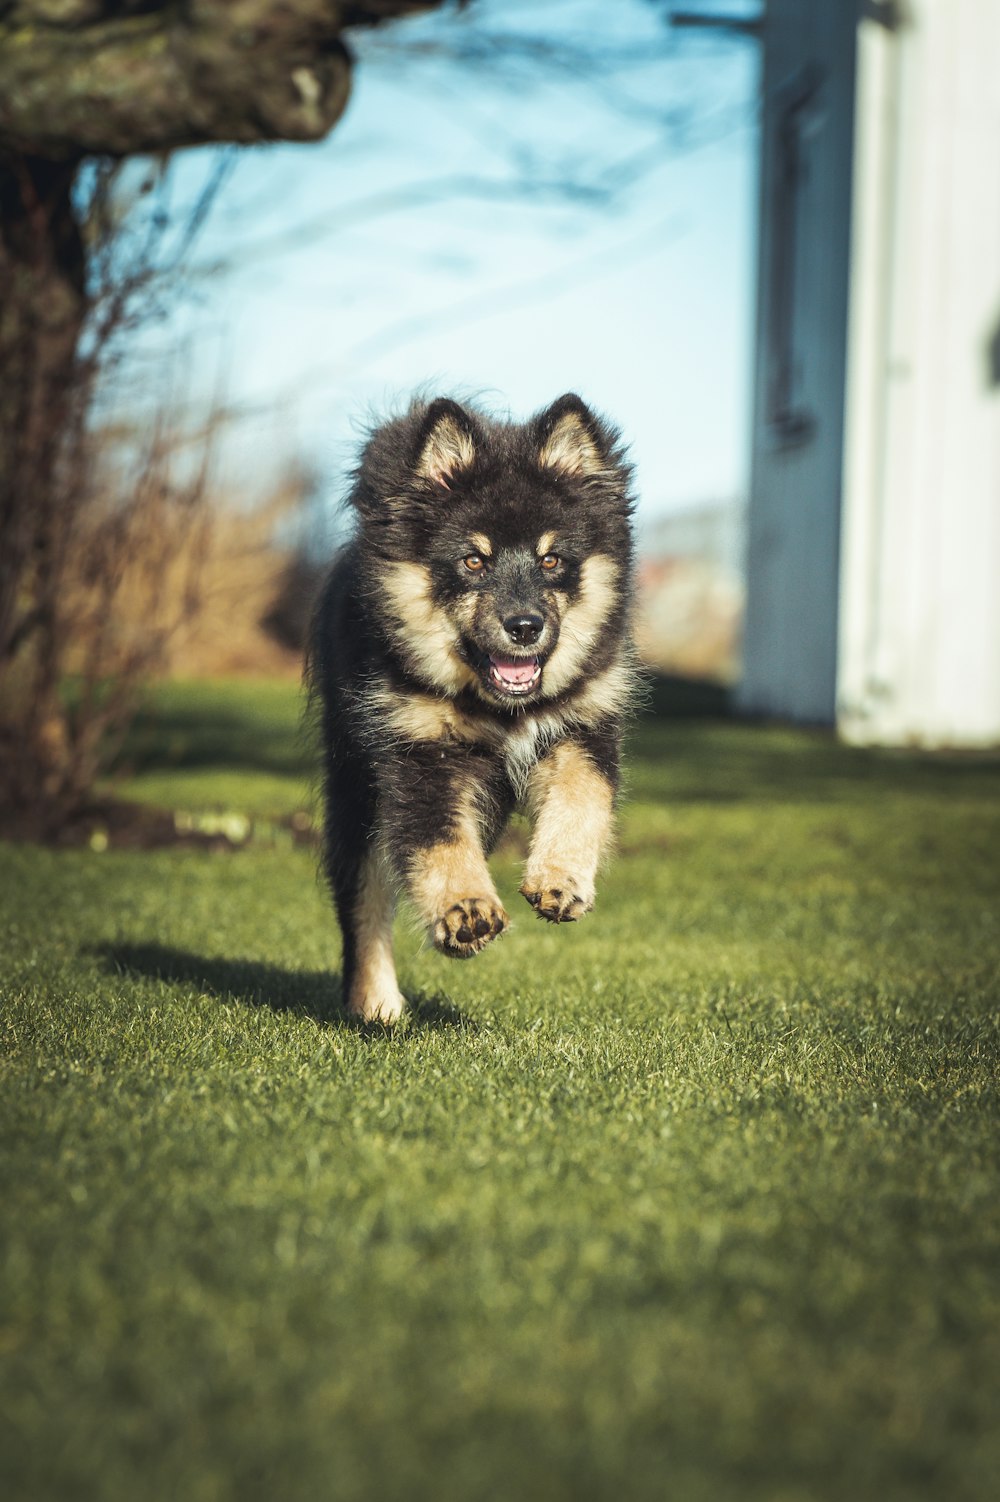 a small dog running across a lush green field